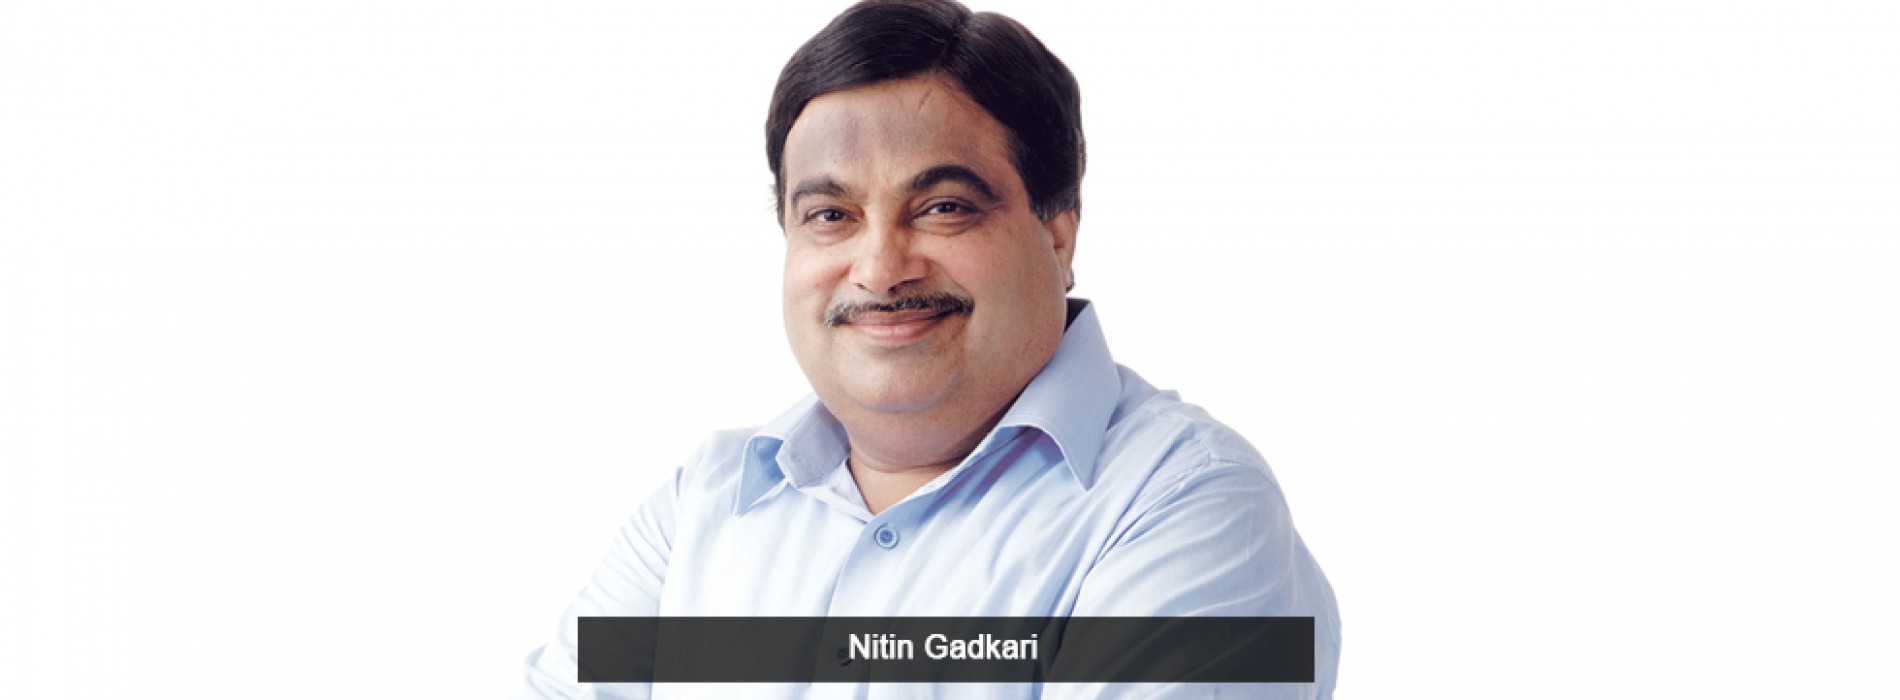 Cruise policy, circuits to make India global hotspot says Nitin Gadkari